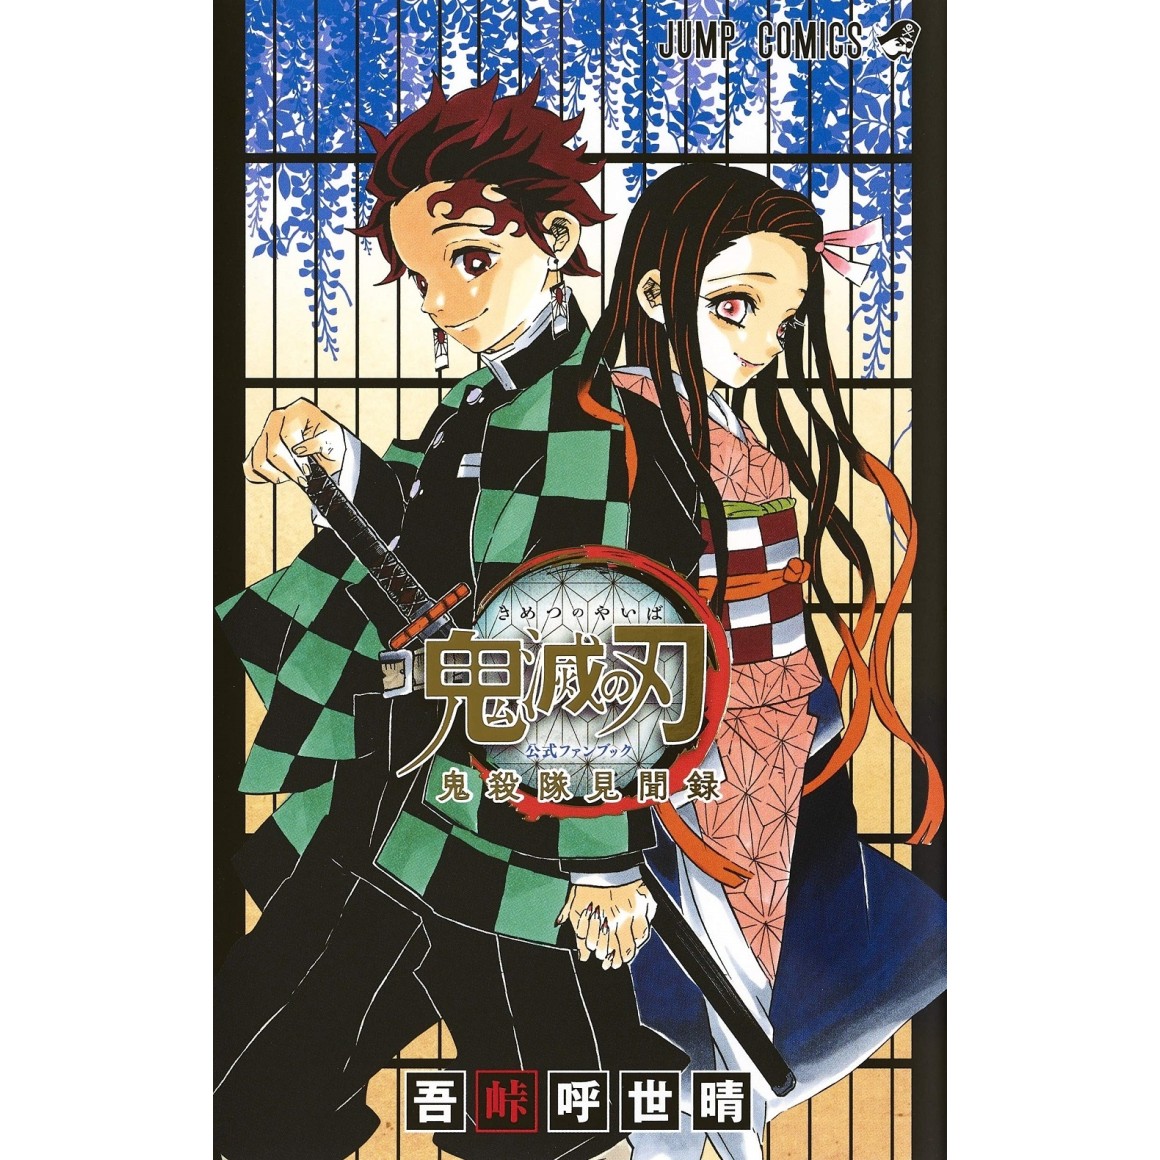 Kimetsu no Yaiba vol. 1 - Edição japonesa 鬼滅の刃